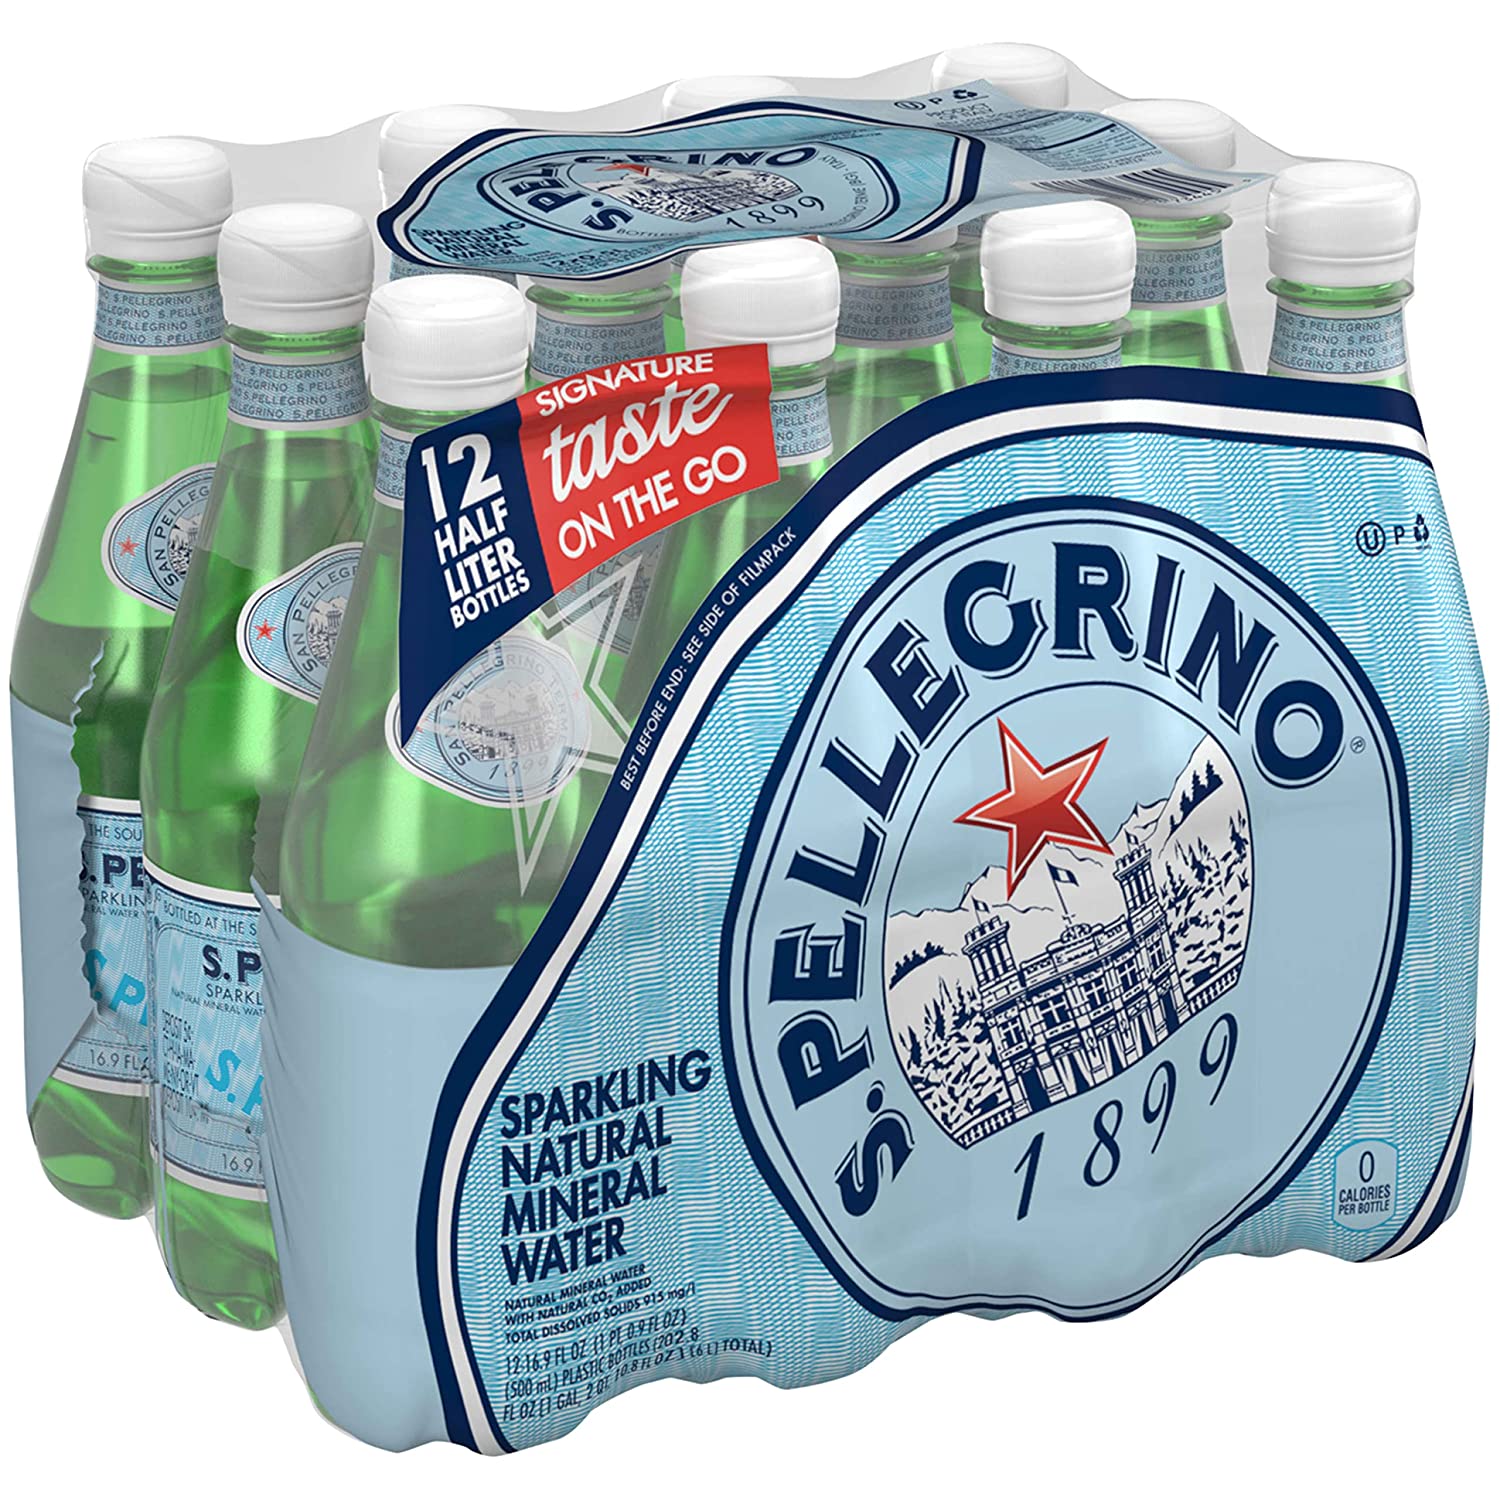 Topo Chico Sparkling Mineral Water (20 oz., 24 pk.) - Sam's Club